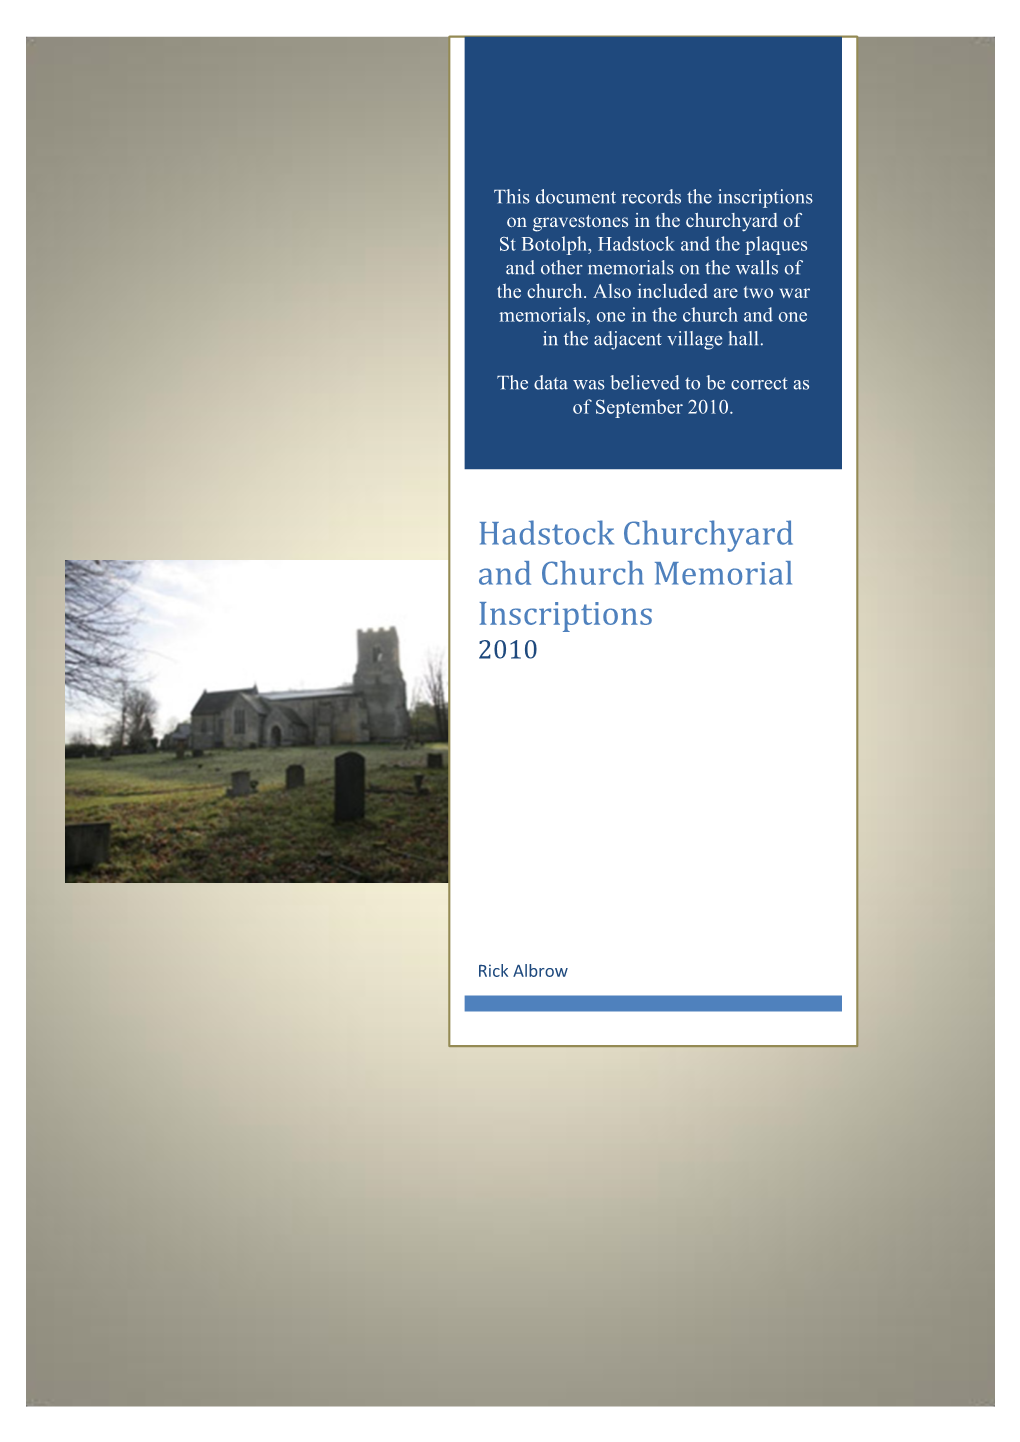 Hadstock Churchyard and Church Memorial Inscriptions 2010